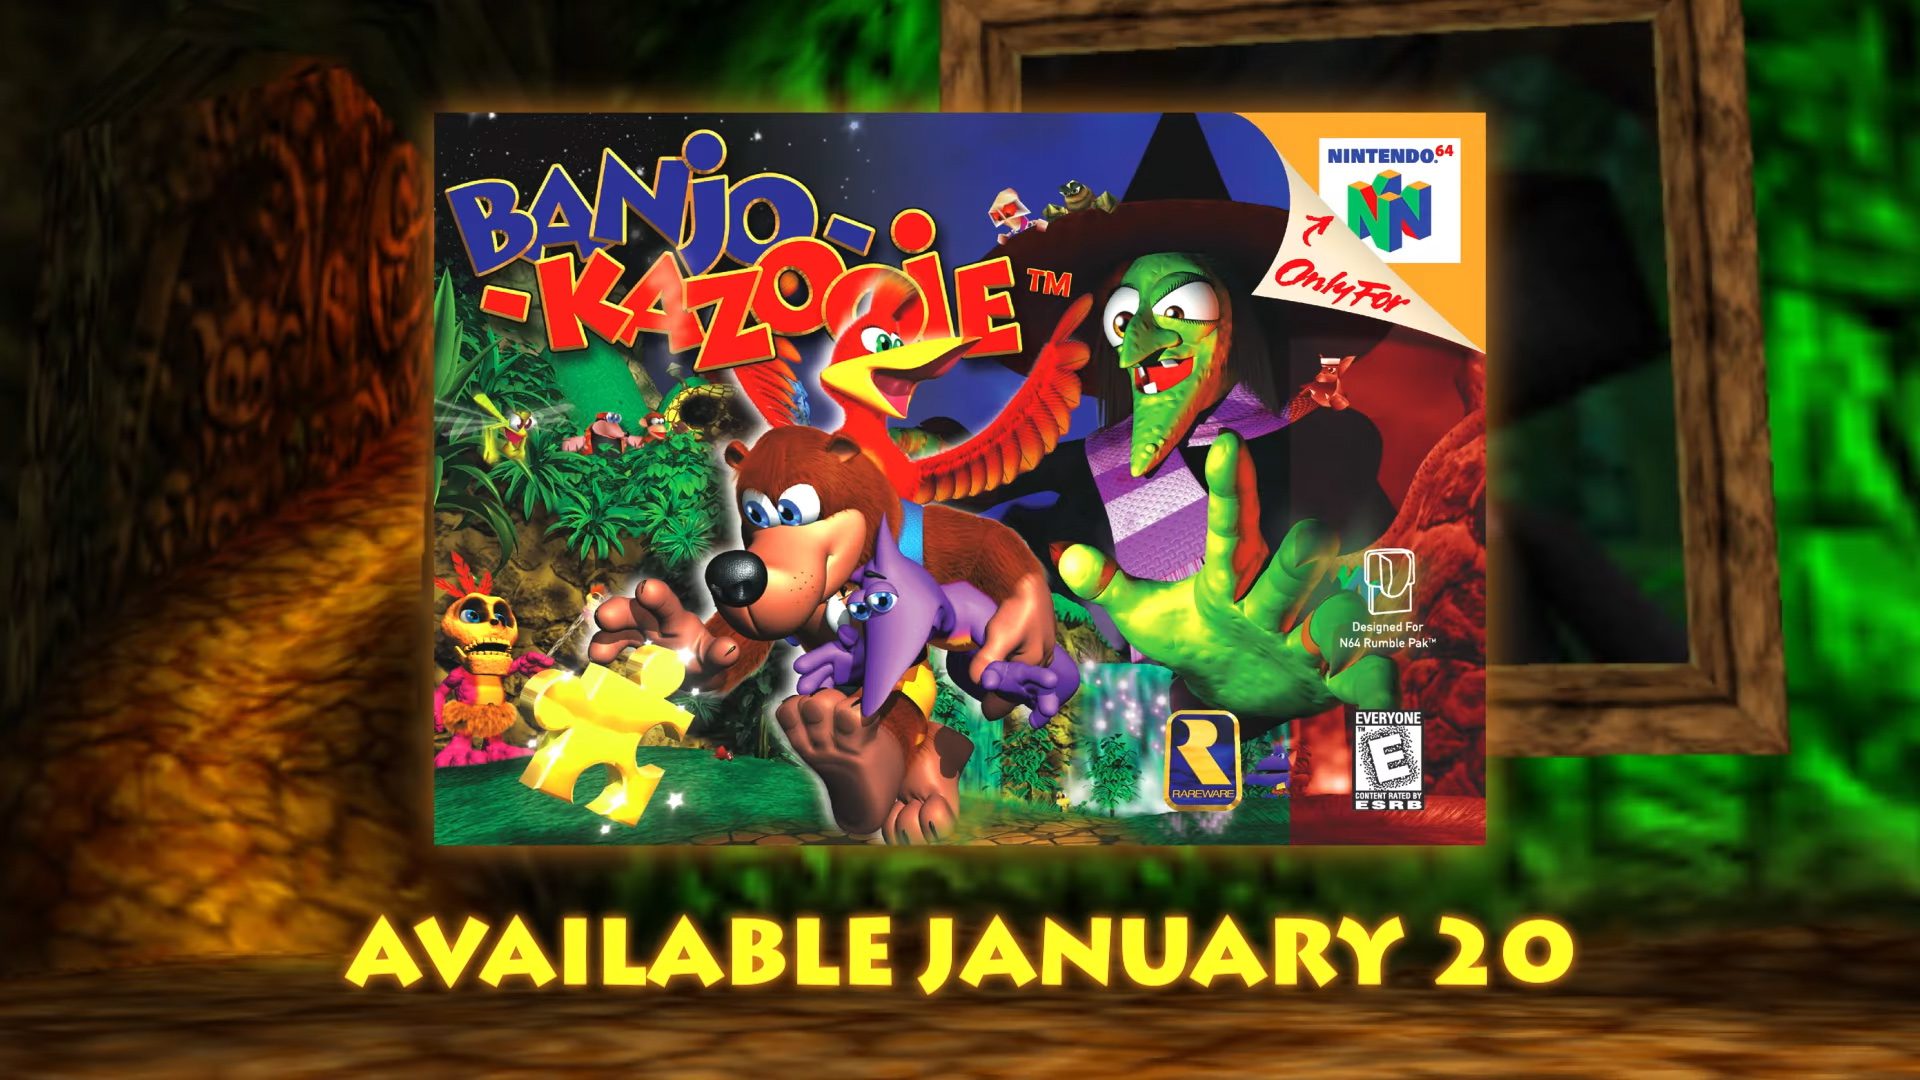 Banjo-Kazooie Returns Is A Fan-made Brand New Banjo Kazooie Game